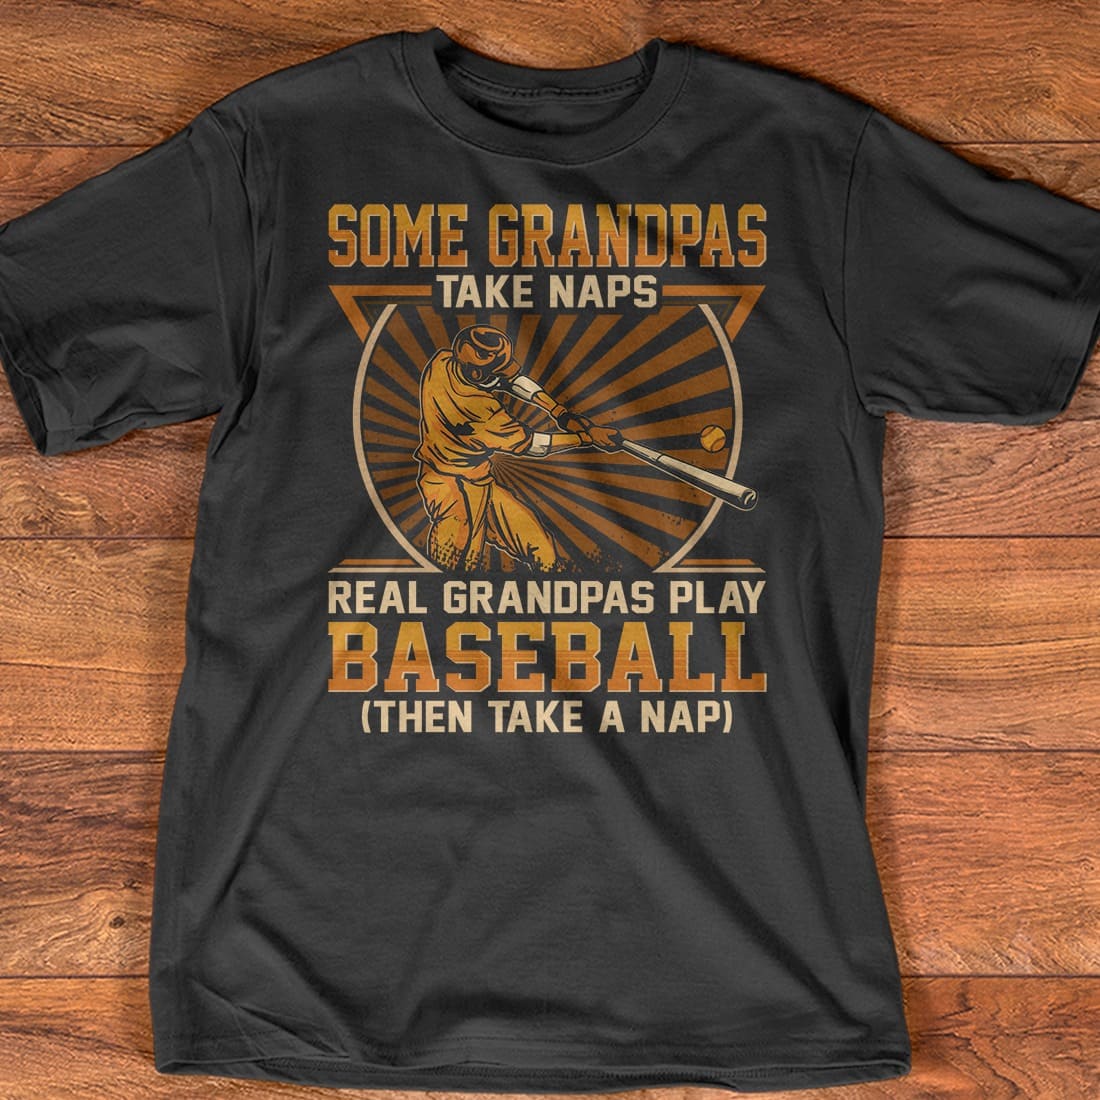 Some grandpas take naps, real grandpas play baseball - Baseball player T-shirt